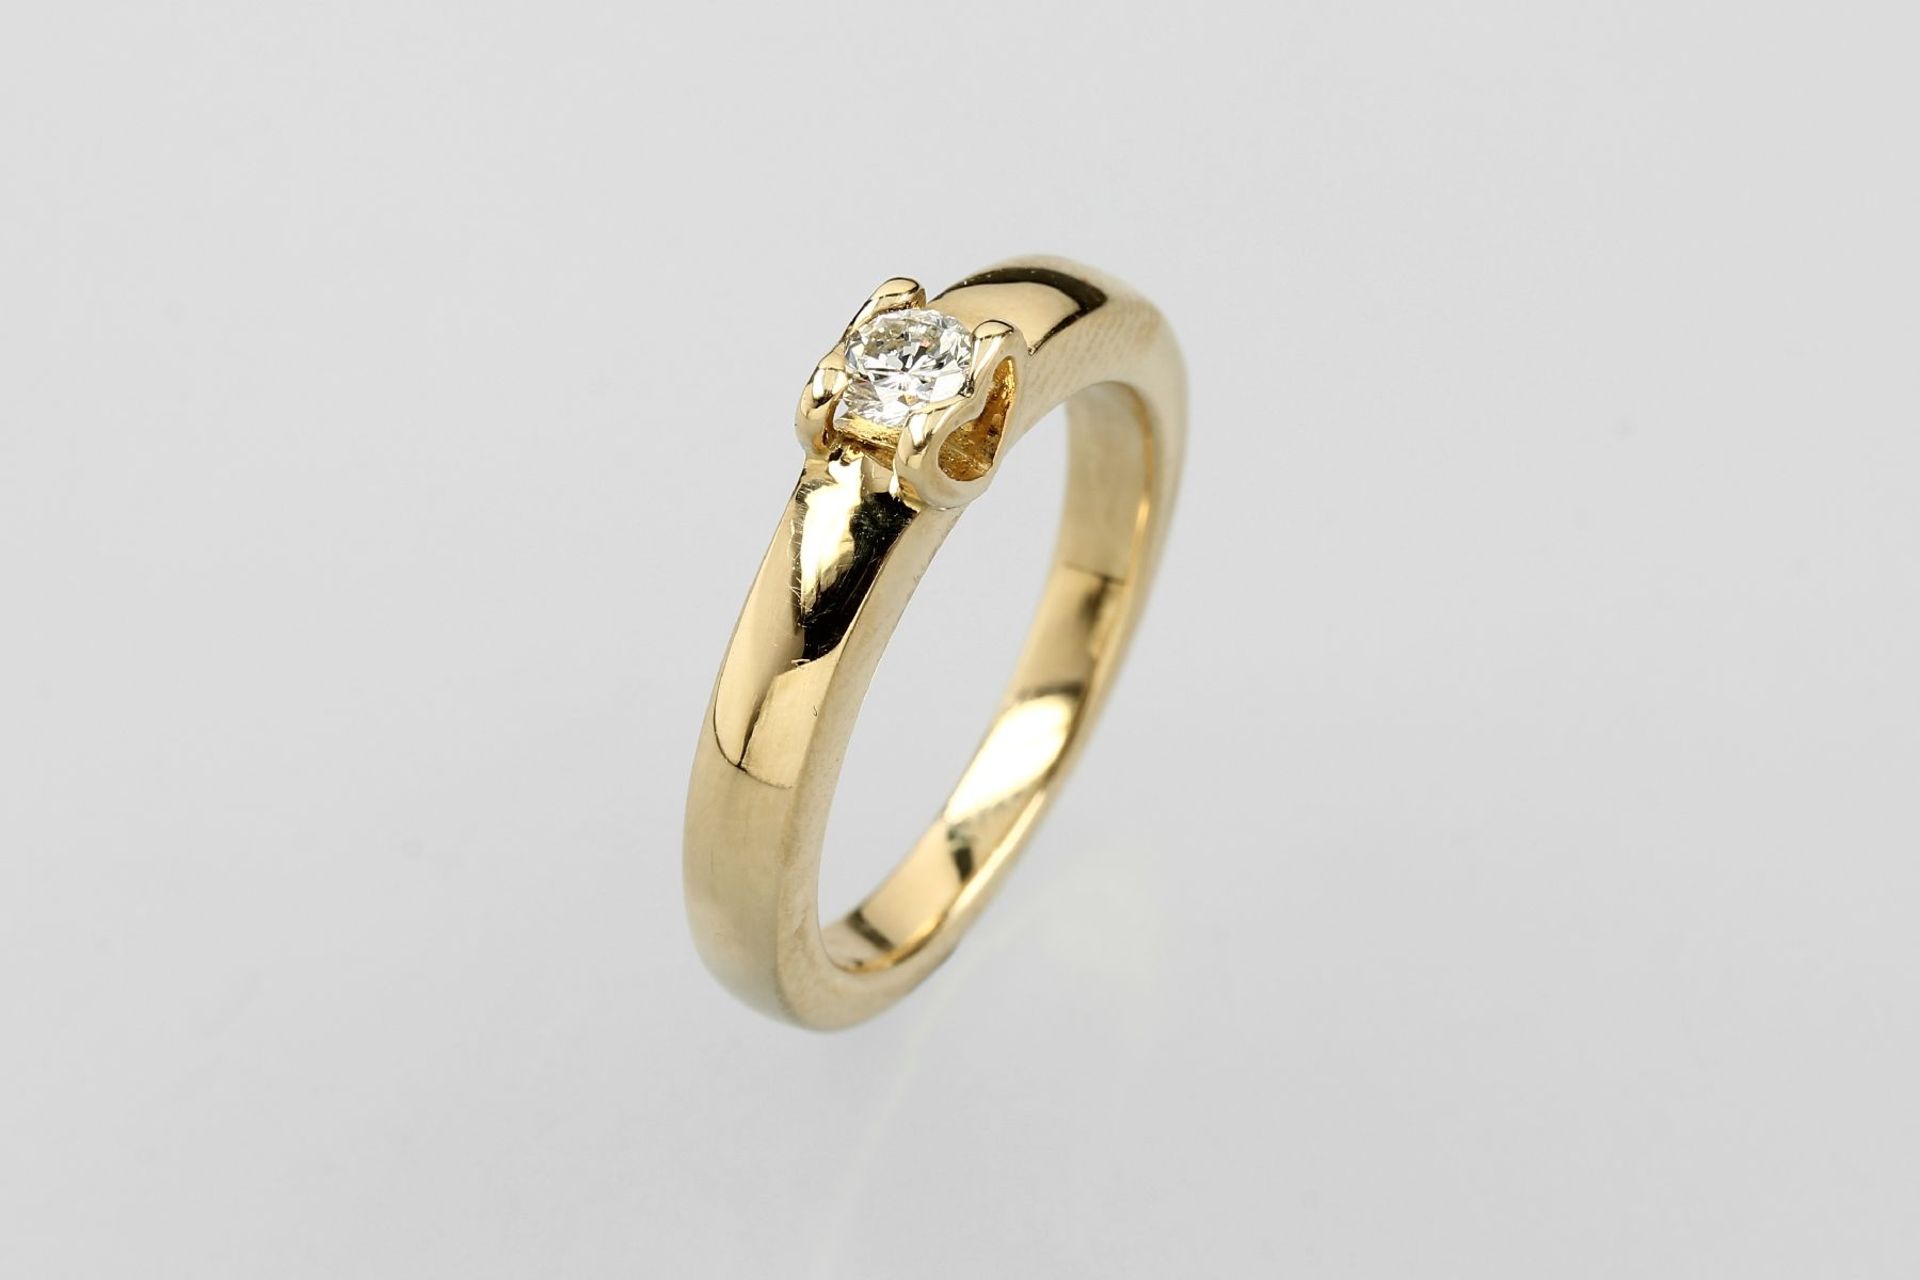 18 kt Gold Ring mit Brillant, GG 750/000, Brillant ca. 0.20 ct feines Weiß/vs-si, RW 56.5, ca. 8.2 g